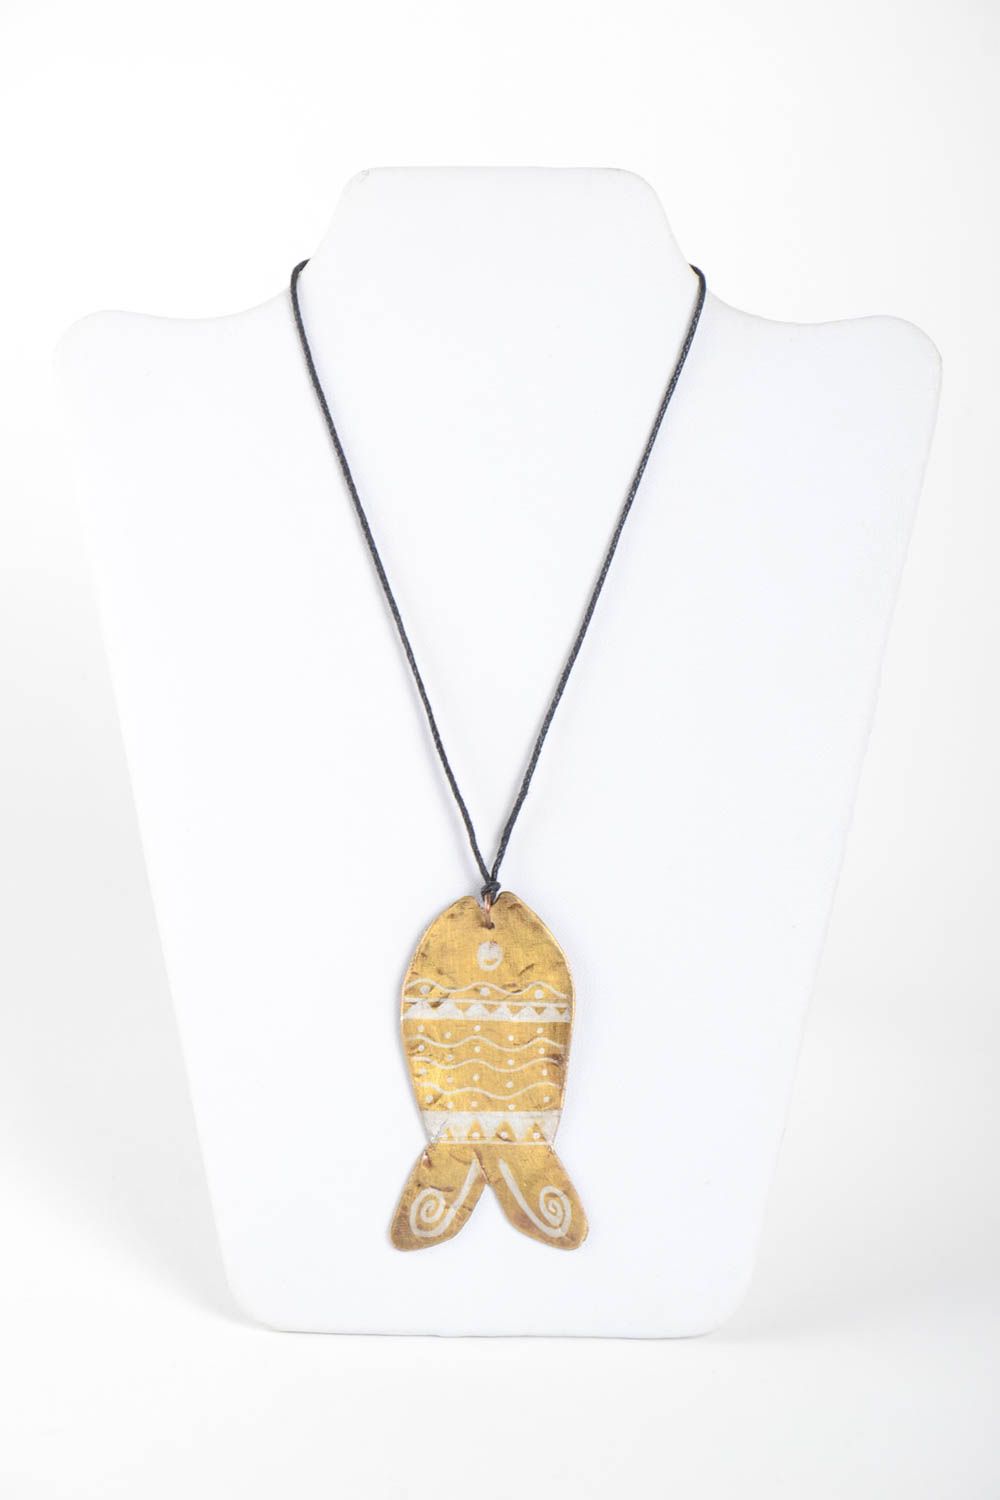 Metal pendant handmade copper pendant wire wrap pendant designer jewelry photo 2